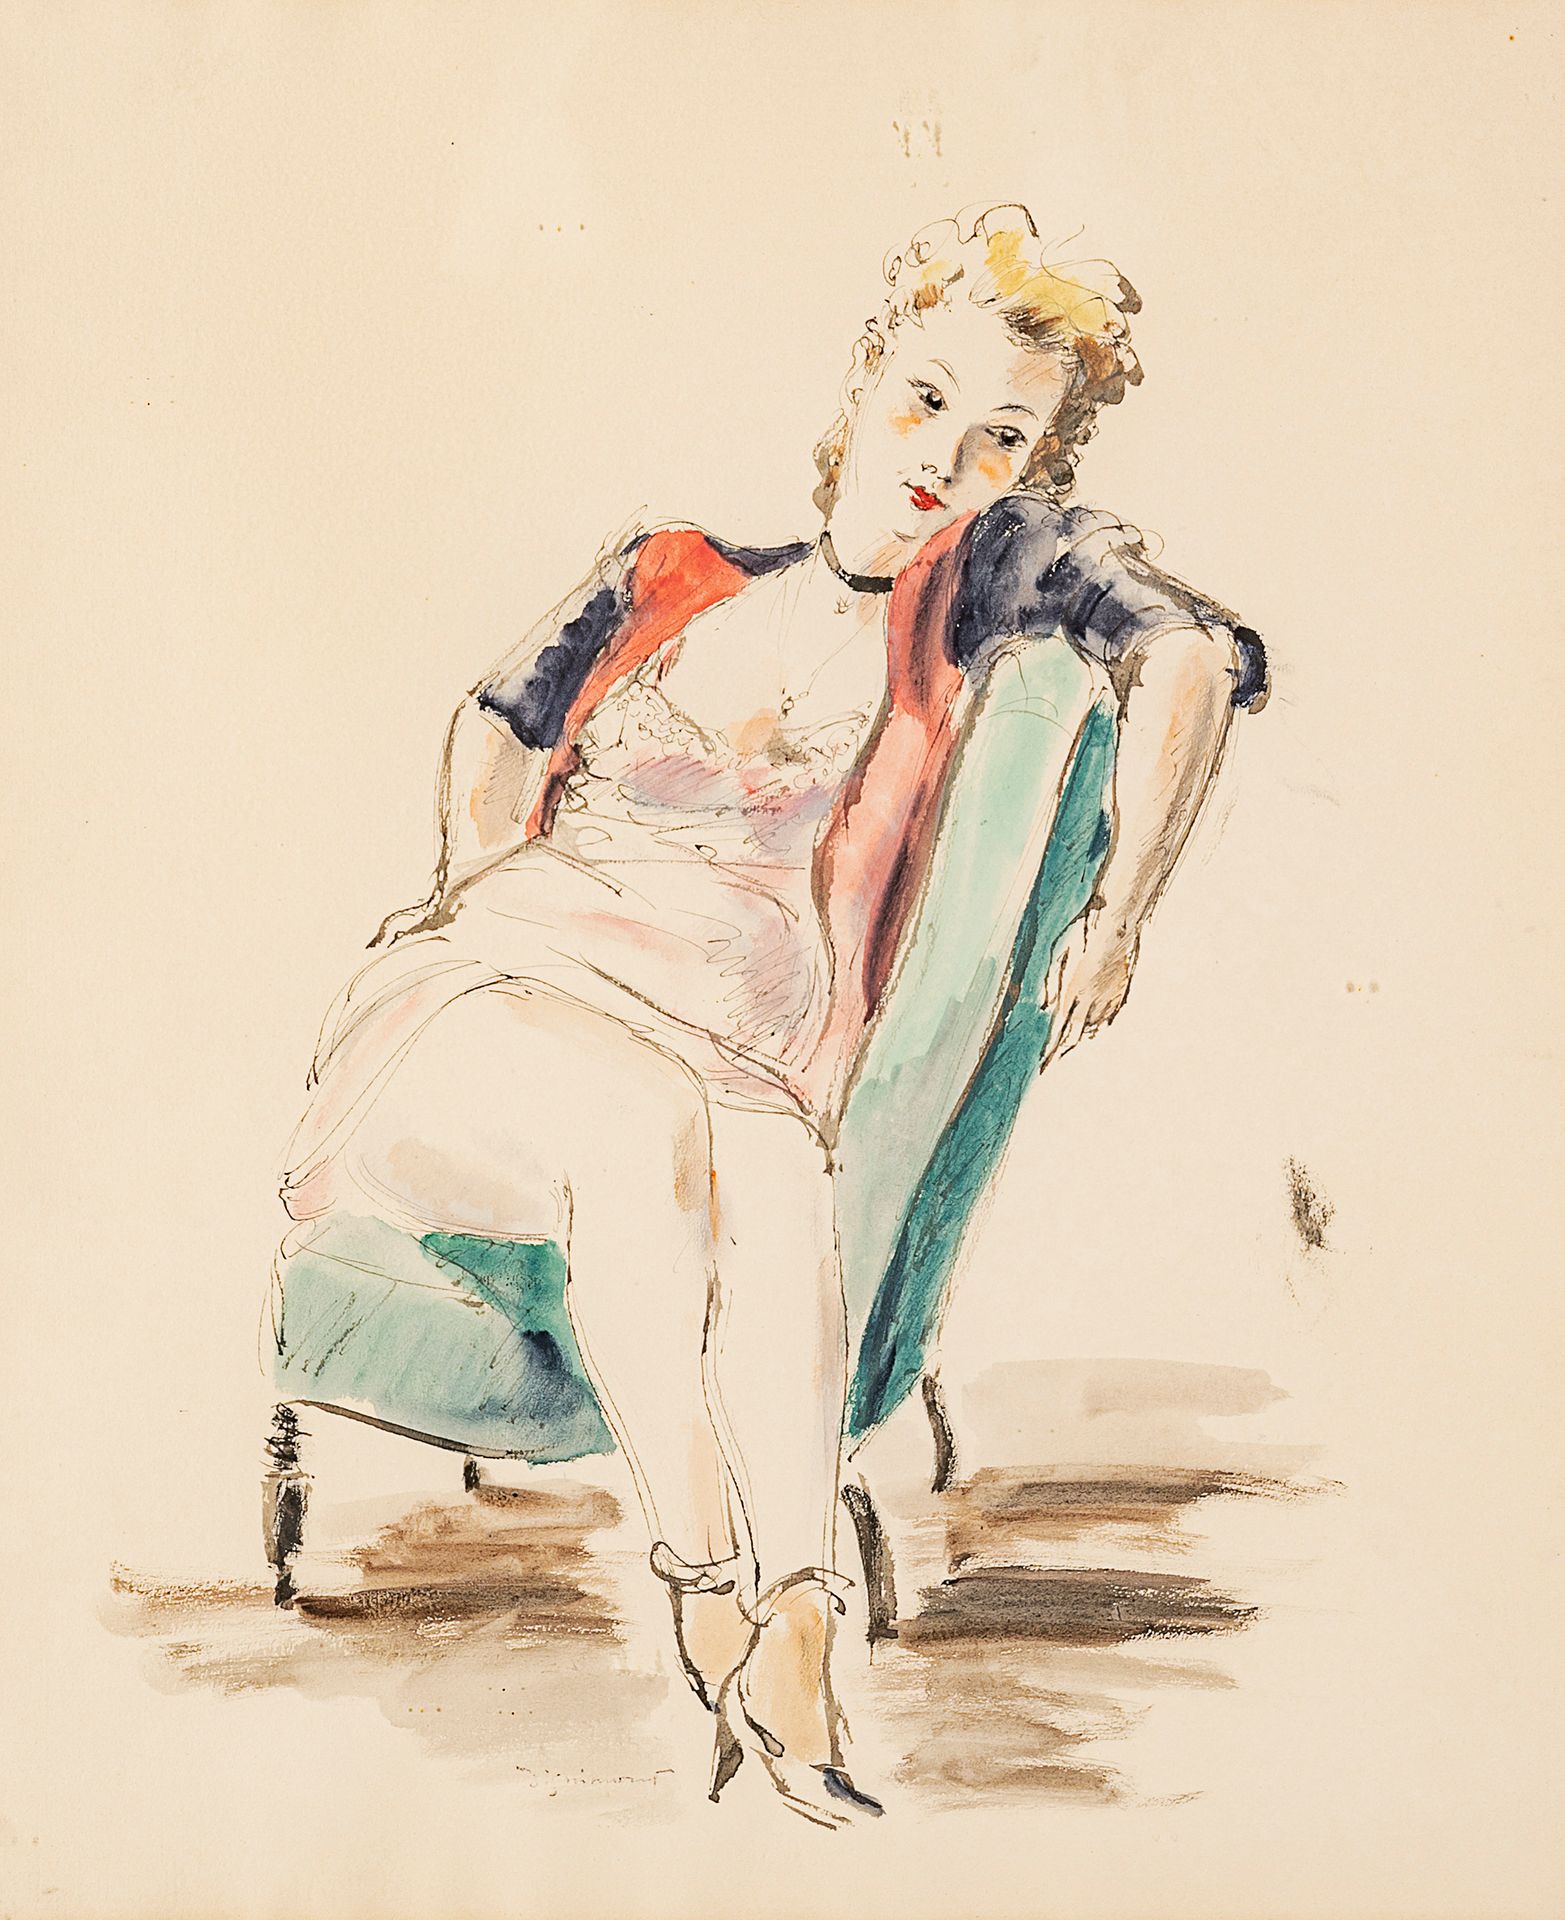 André DIGNIMONT (1891-1965) 安德烈-杜维蒙(1891-1965)

坐着的女人

纸上水彩画，左下角签名

57 x 47 厘米